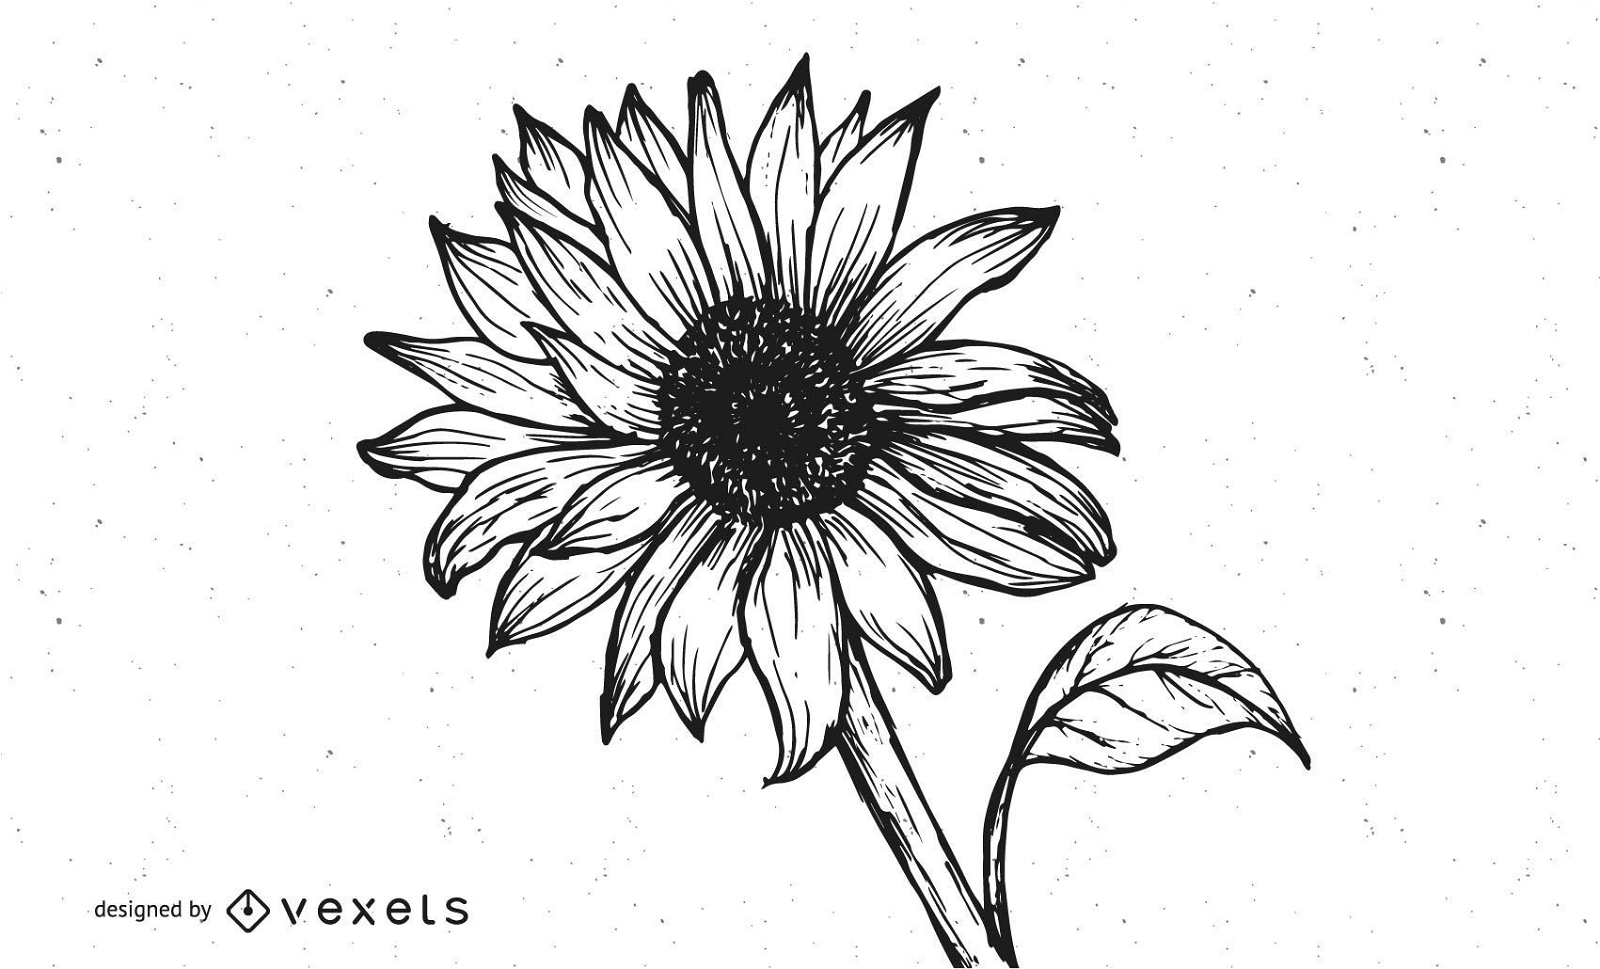 Grungy Hand Drawn Sunflower